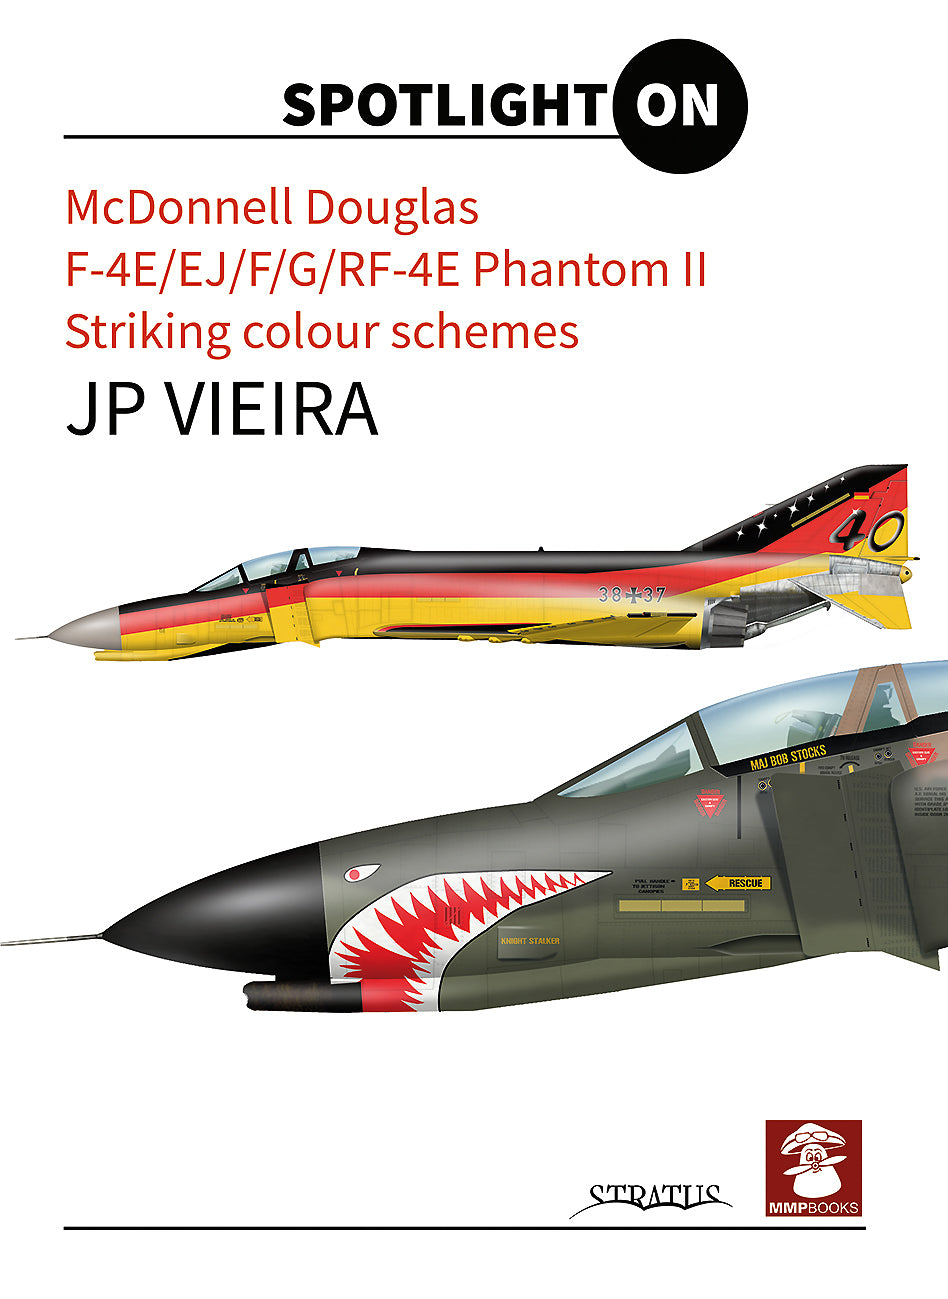 McDonnel Douglas, F-4e/EJ/F/G/RF-4E Phantom II. Striking colour schemes